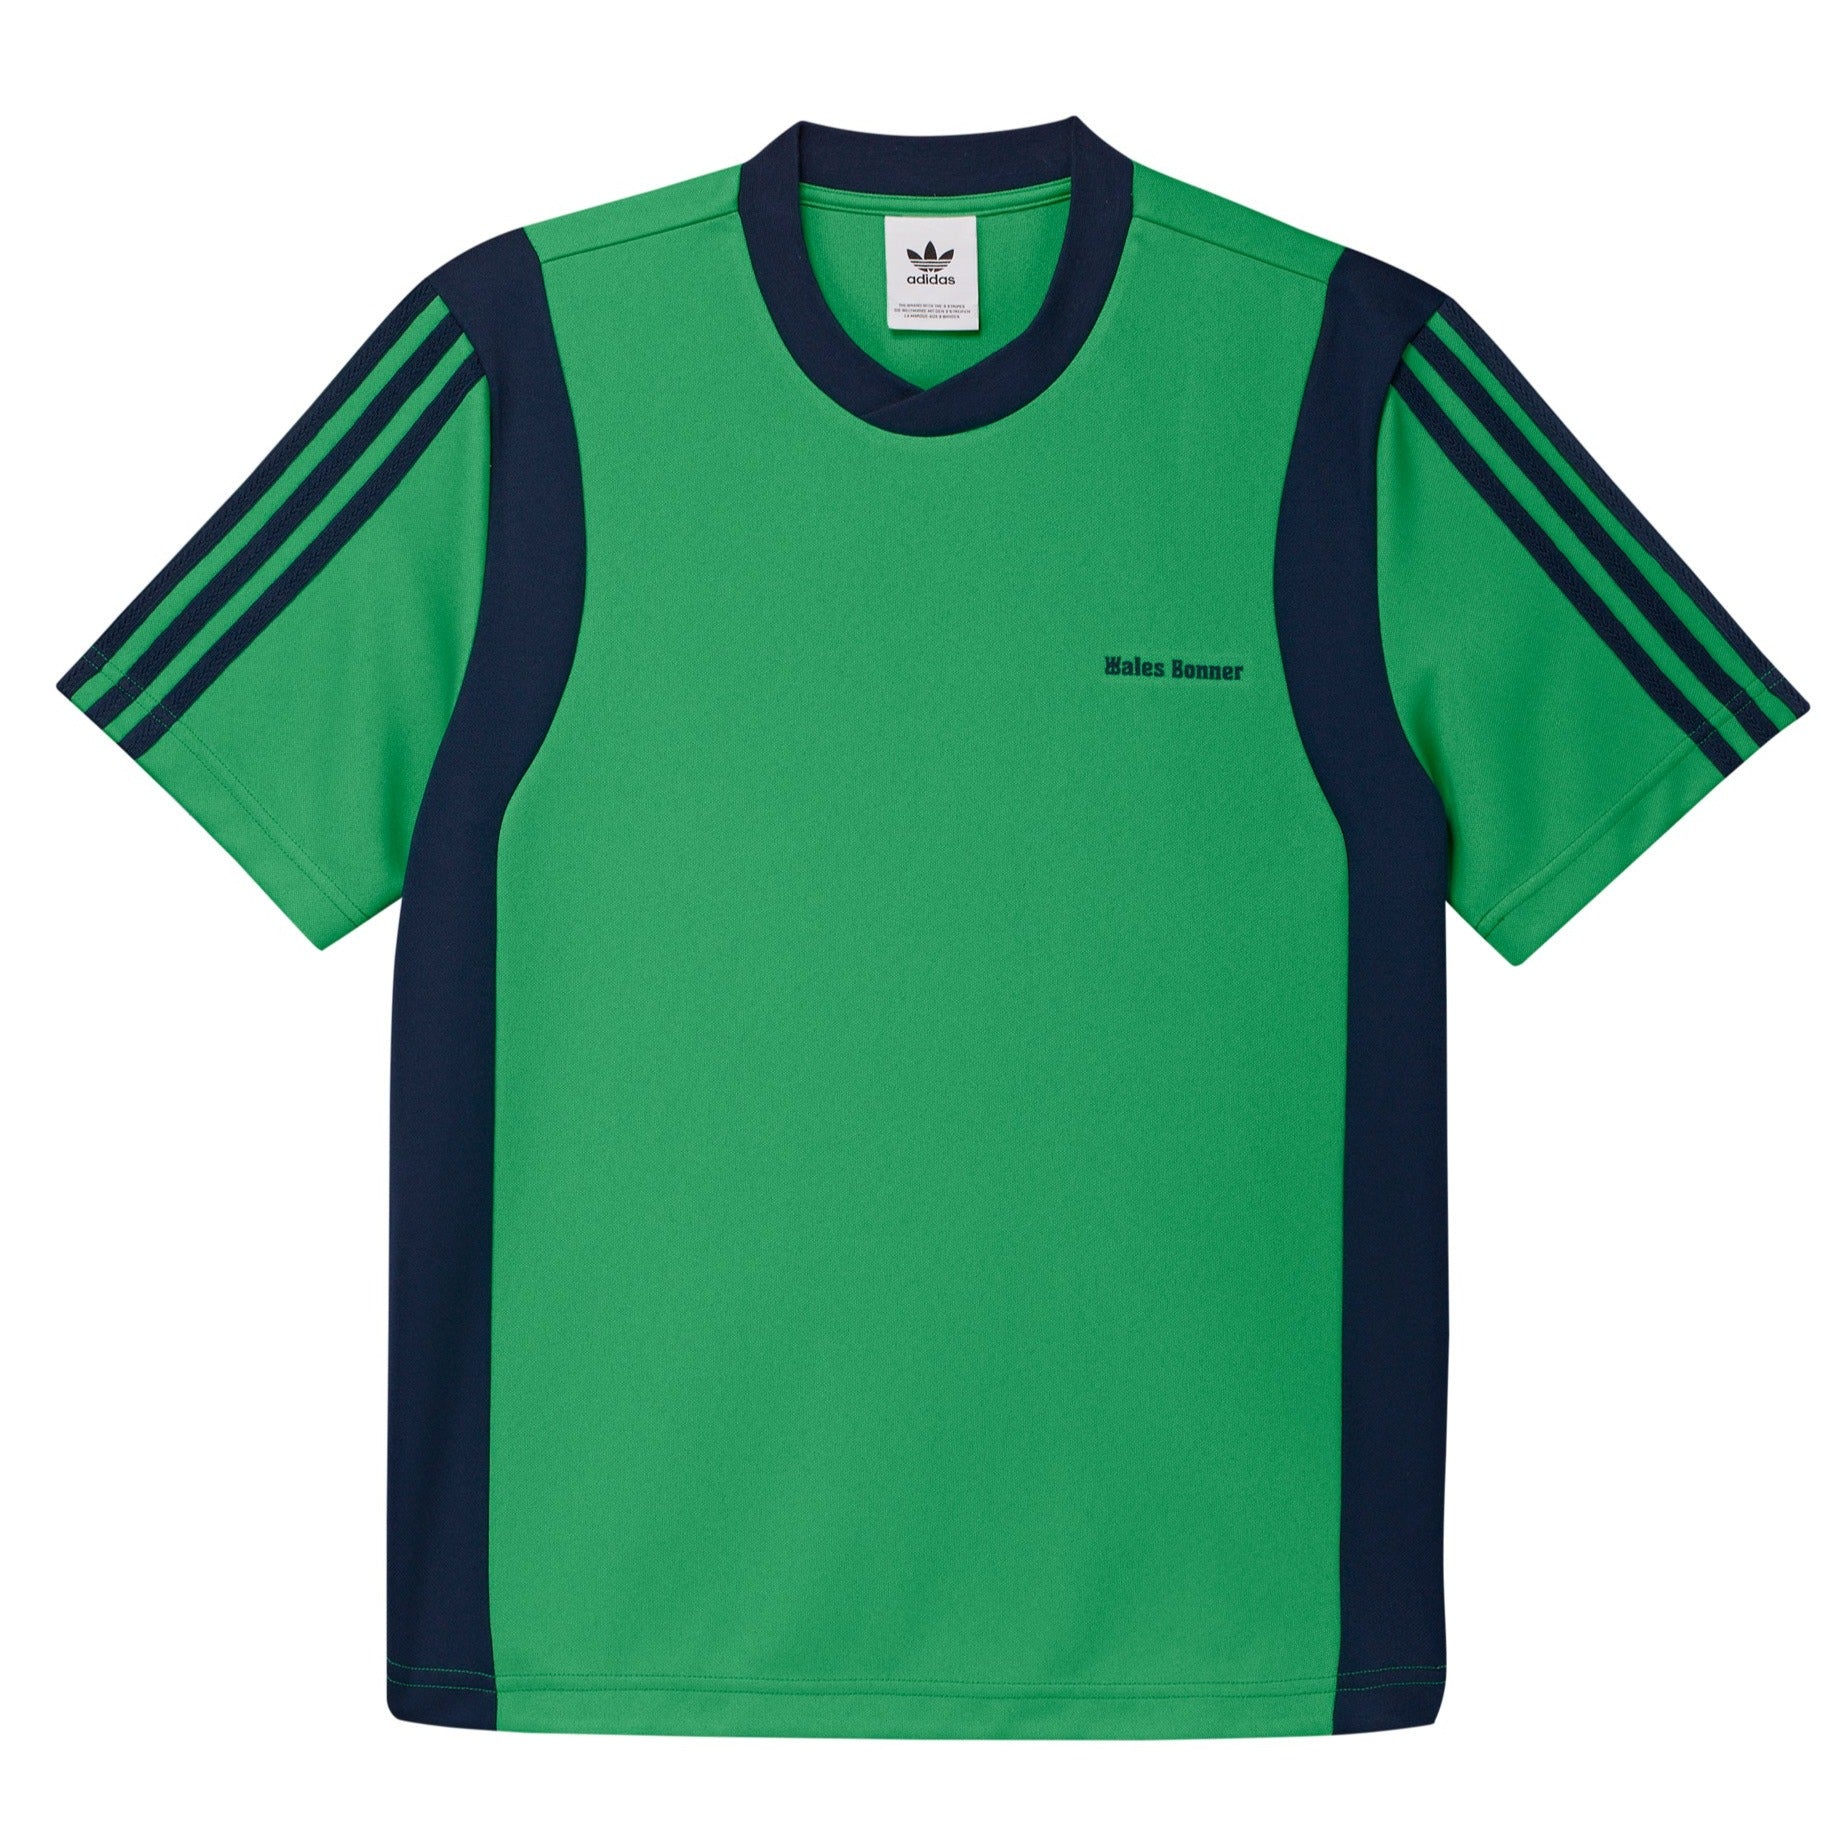 ADIDAS WALES BONNER - Wb Ftbl Shirt - (Vivid Gr) – DSMG E-SHOP